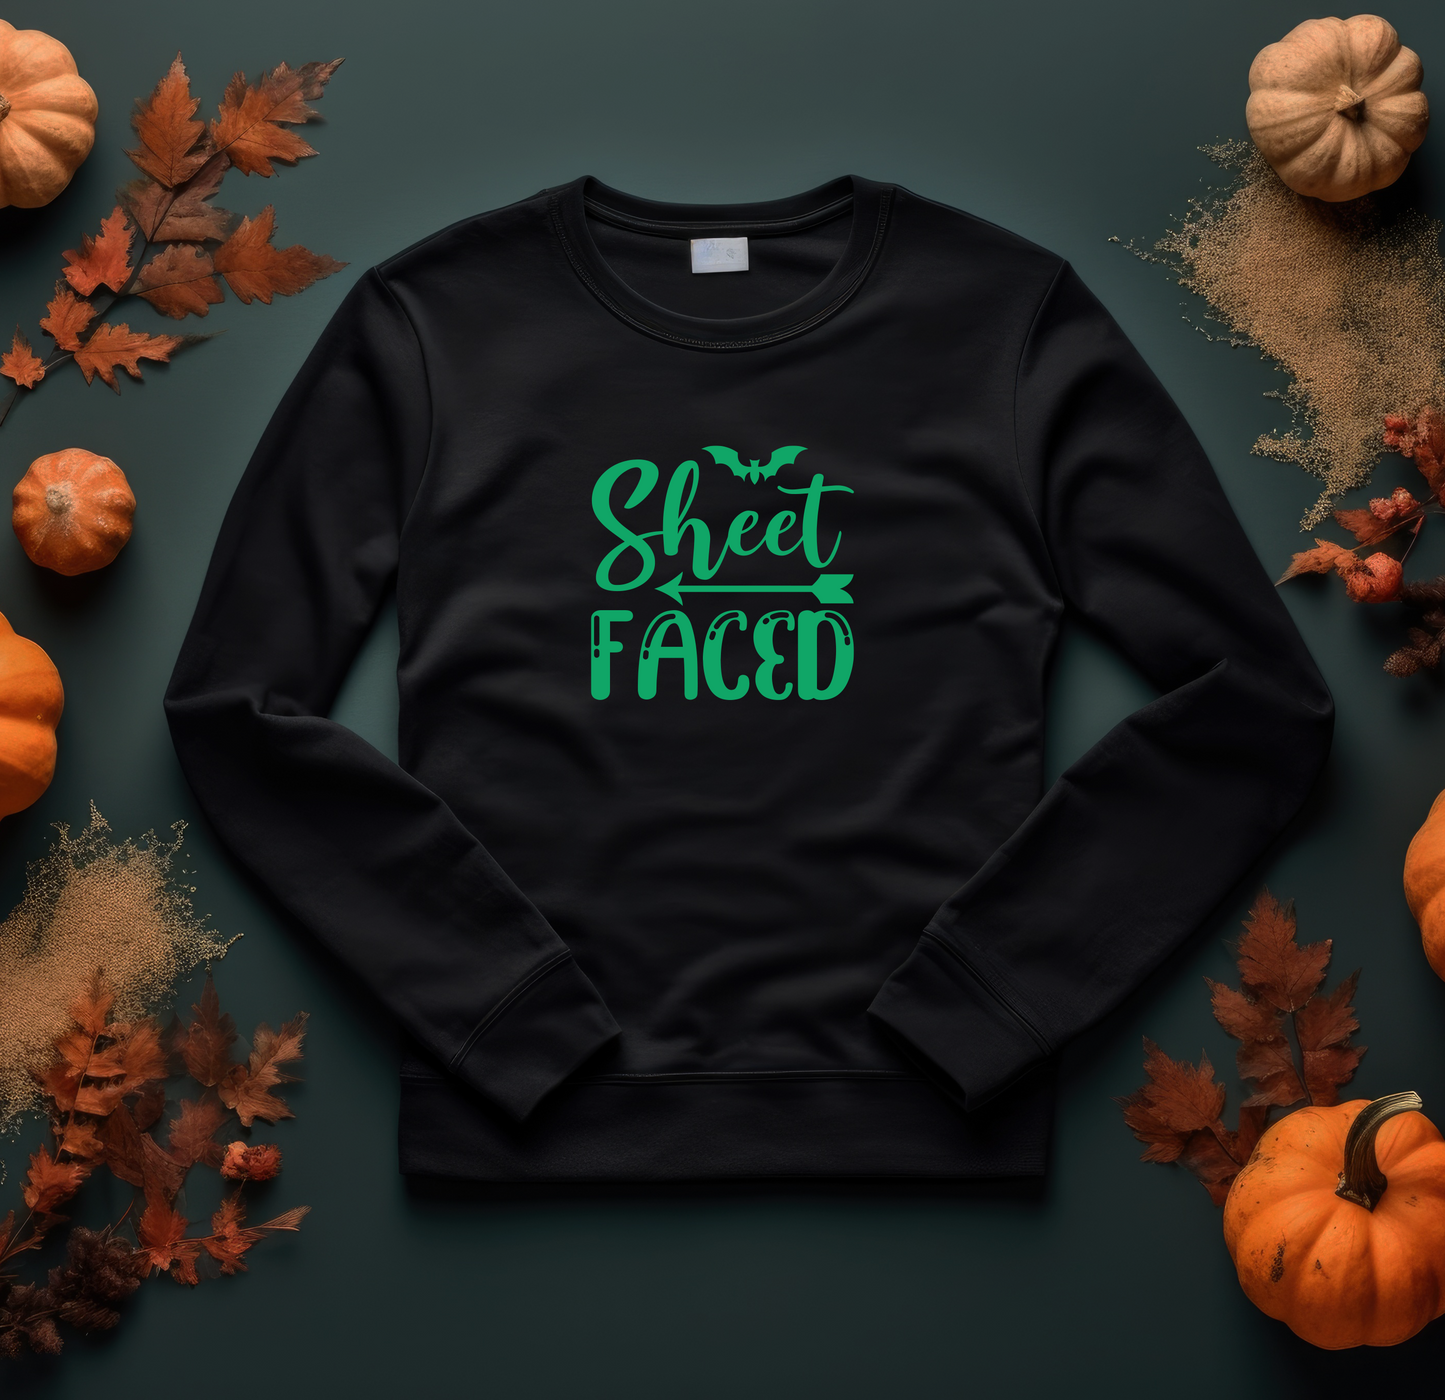 Sheet Faced Funny Glow In The Dark Sweatshirt Halloween